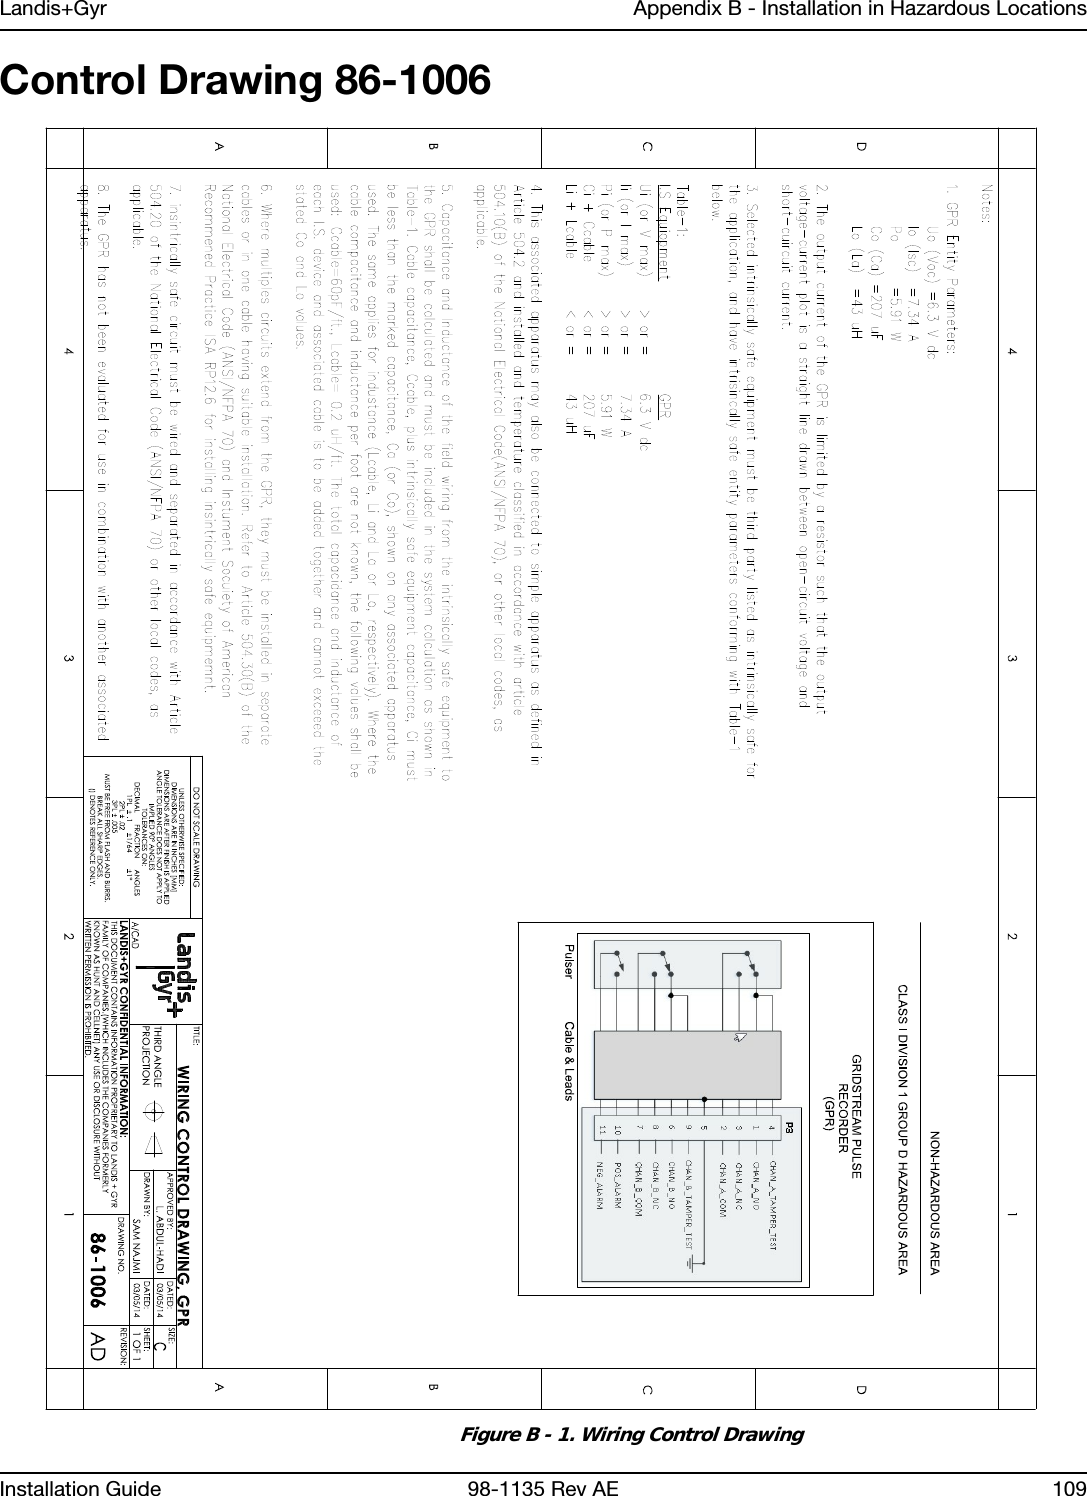 Landis+Gyr Appendix B - Installation in Hazardous LocationsInstallation Guide 98-1135 Rev AE 109Control Drawing 86-1006 Figure B - 1. Wiring Control Drawing